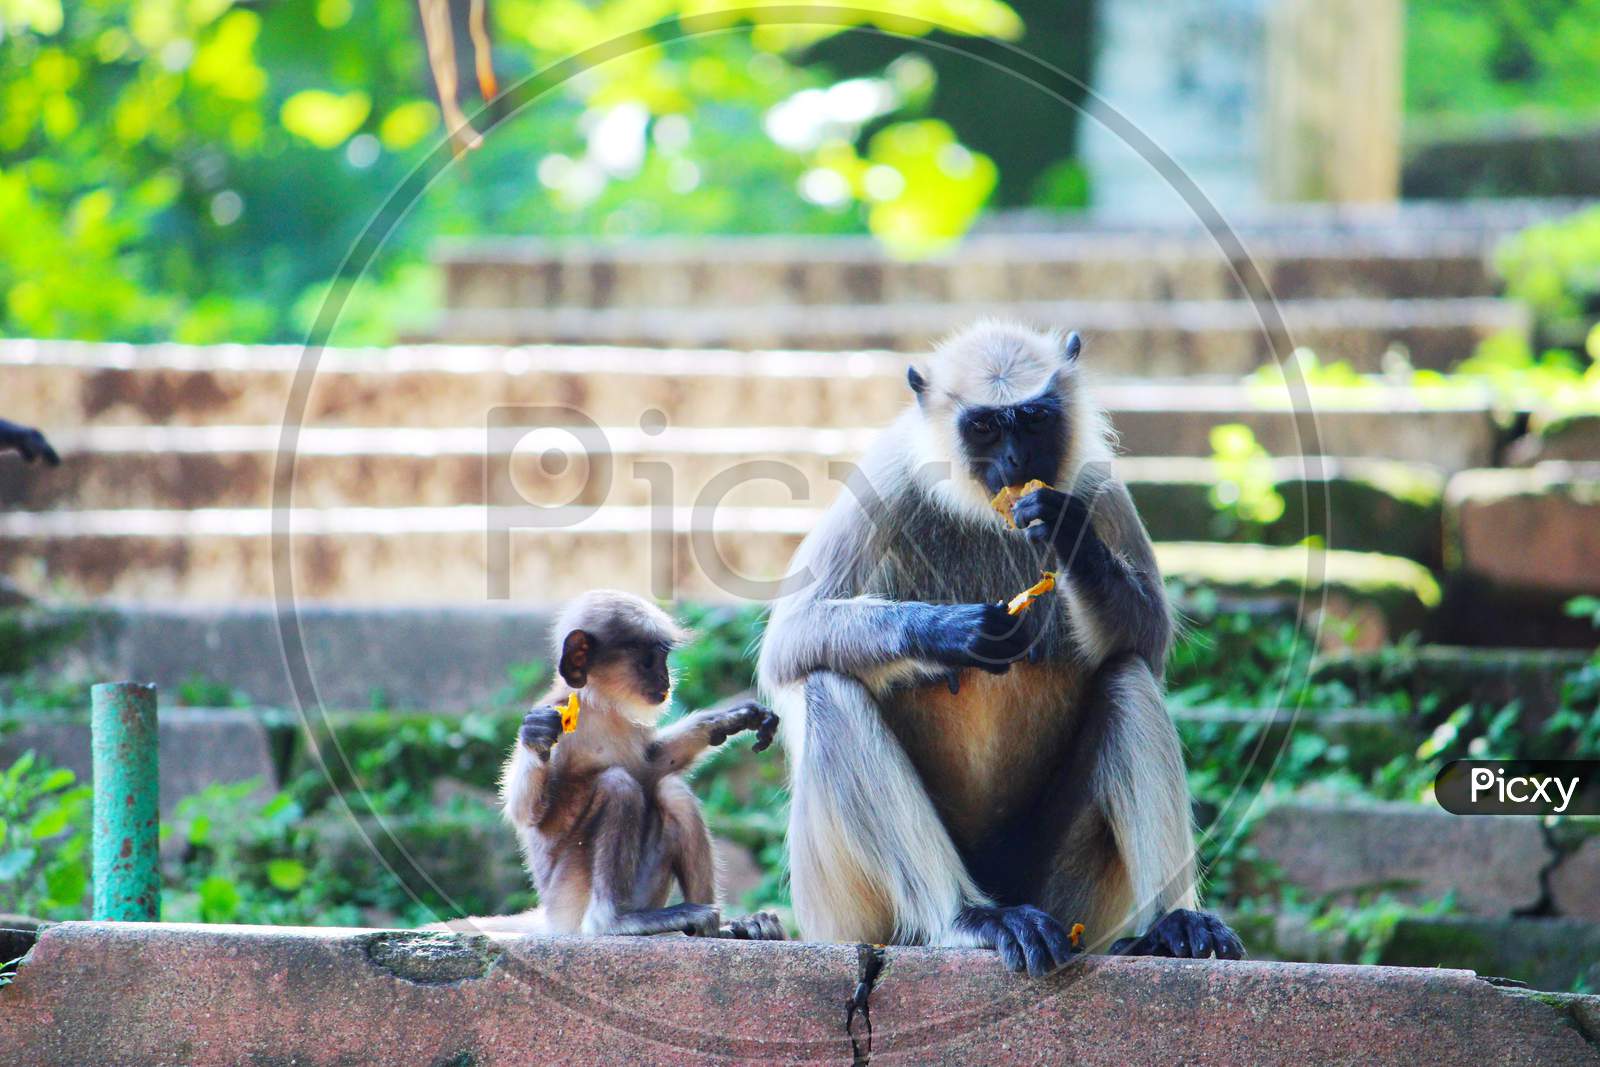 Mumma Monkey and baby monkey having breakfast